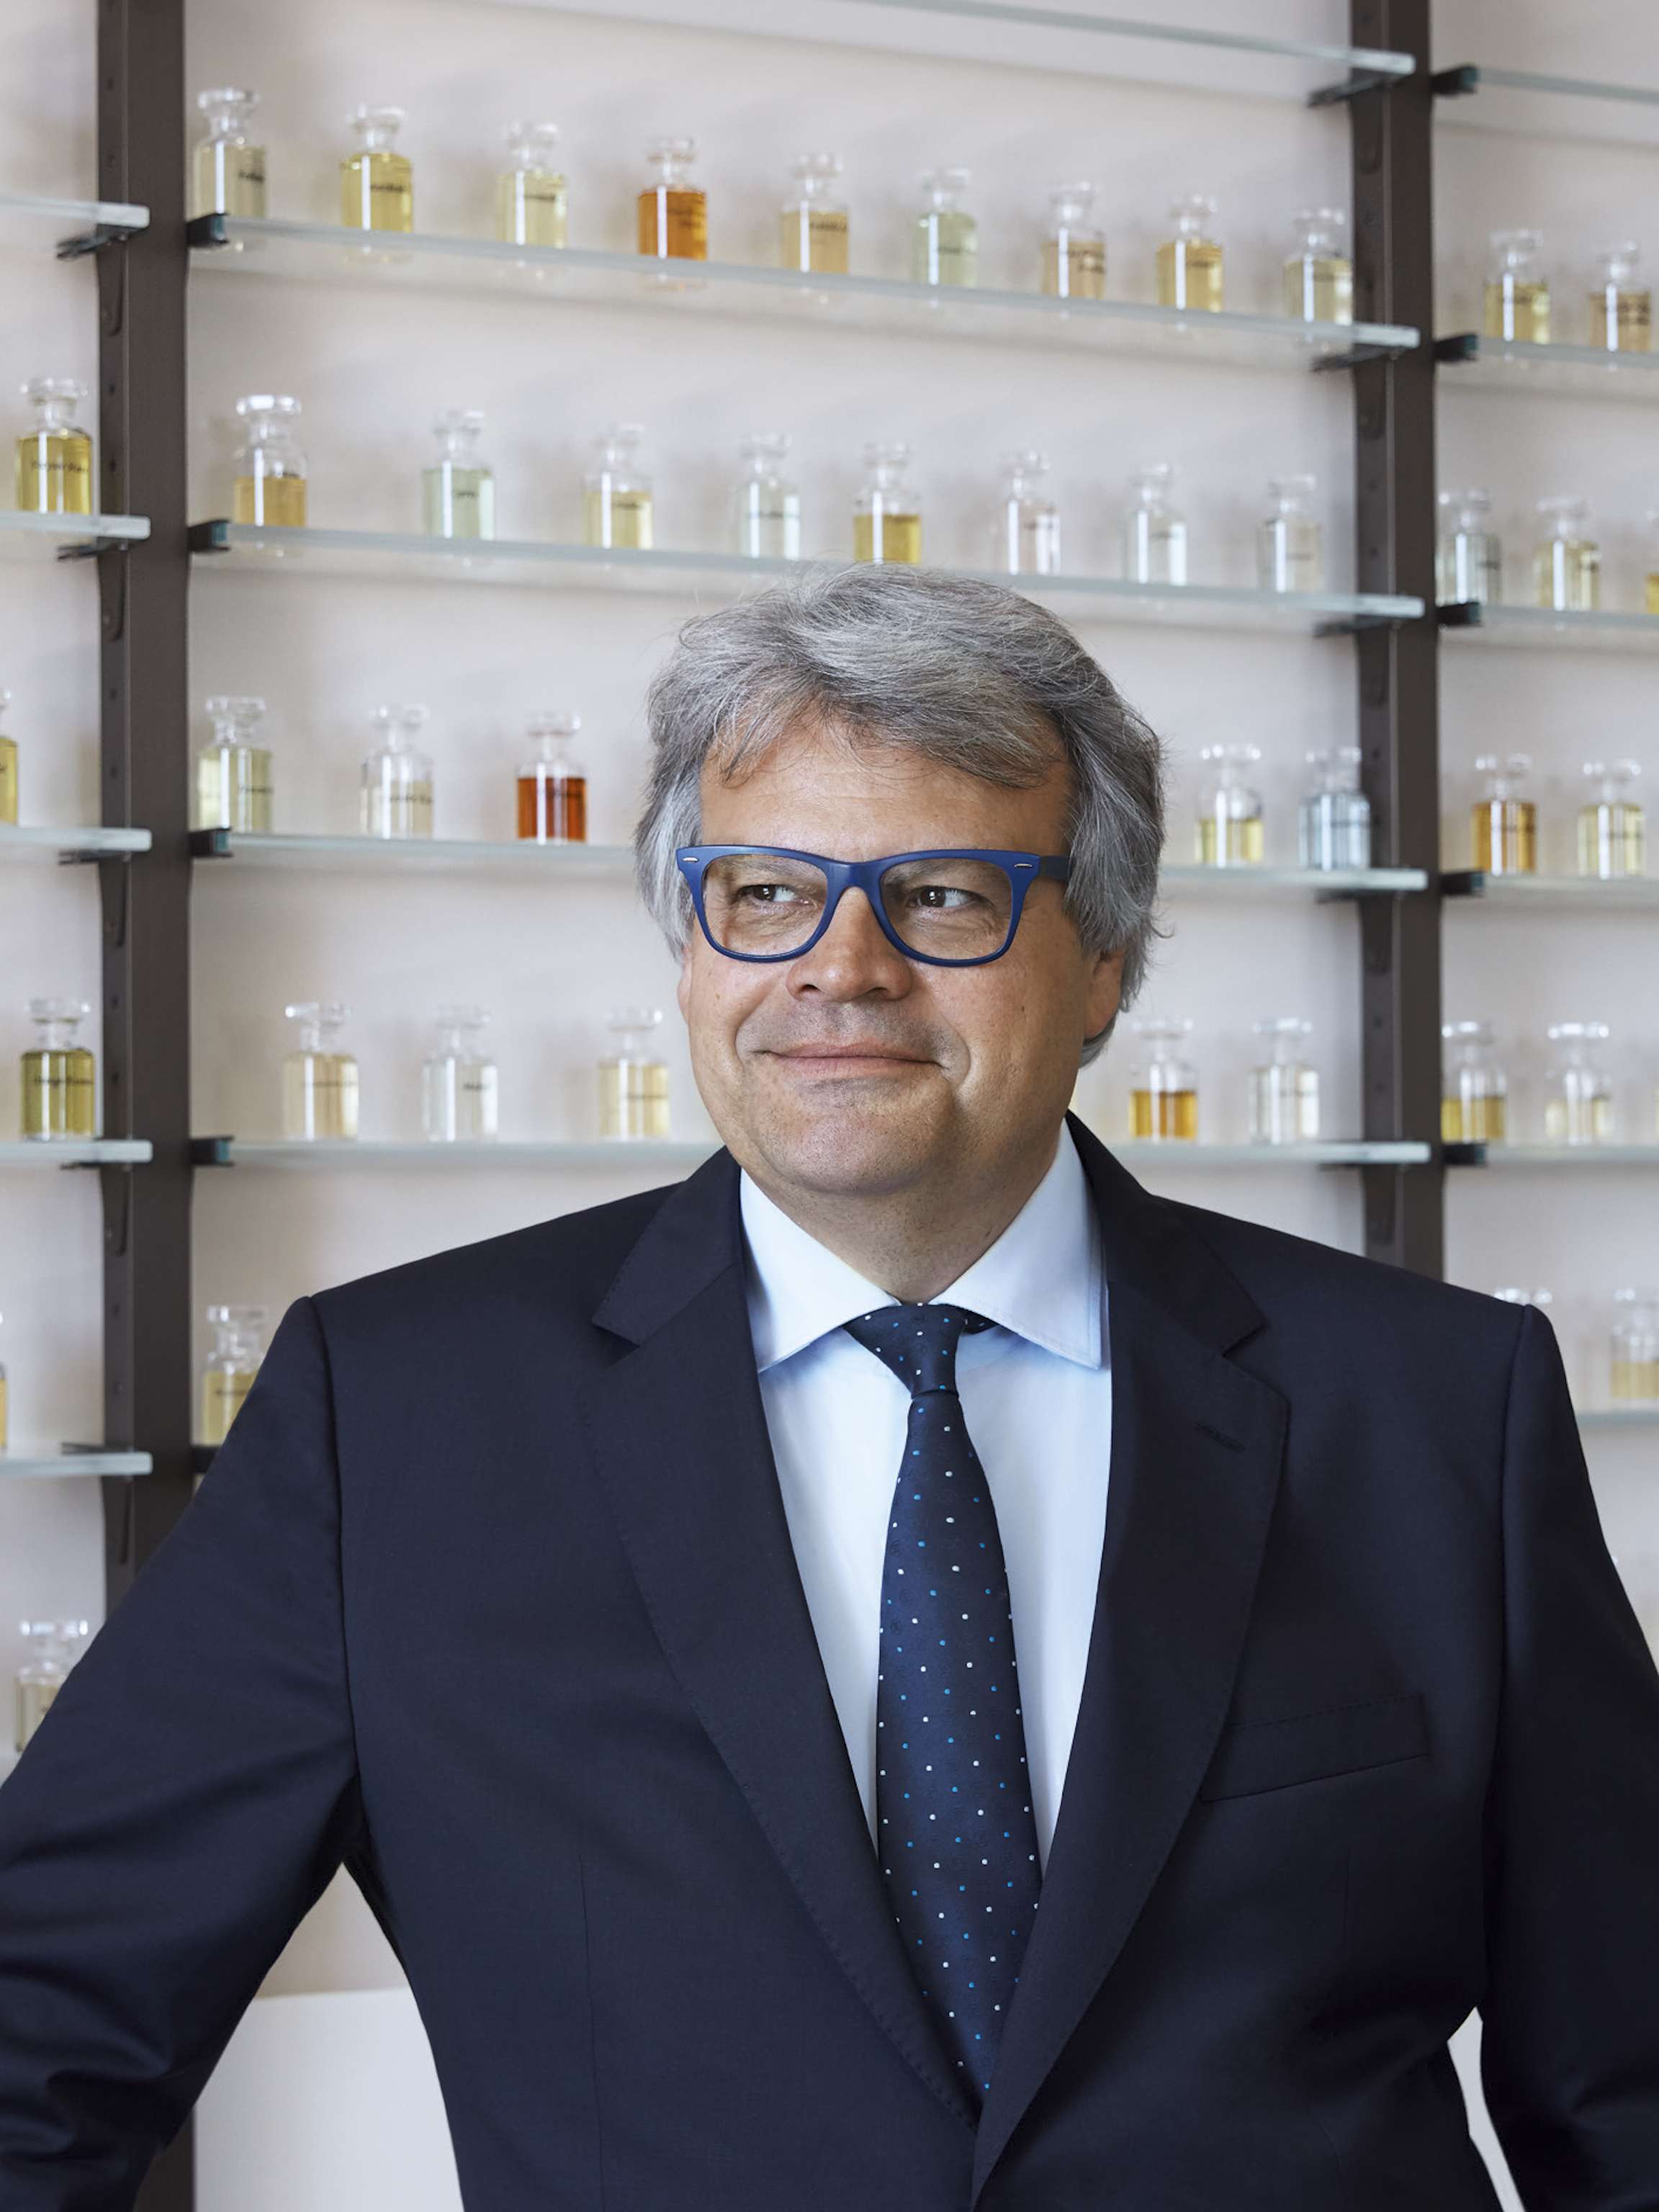 Louis Vuitton releasing fragrances by master perfumer Jacques  Cavallier-Belletrud